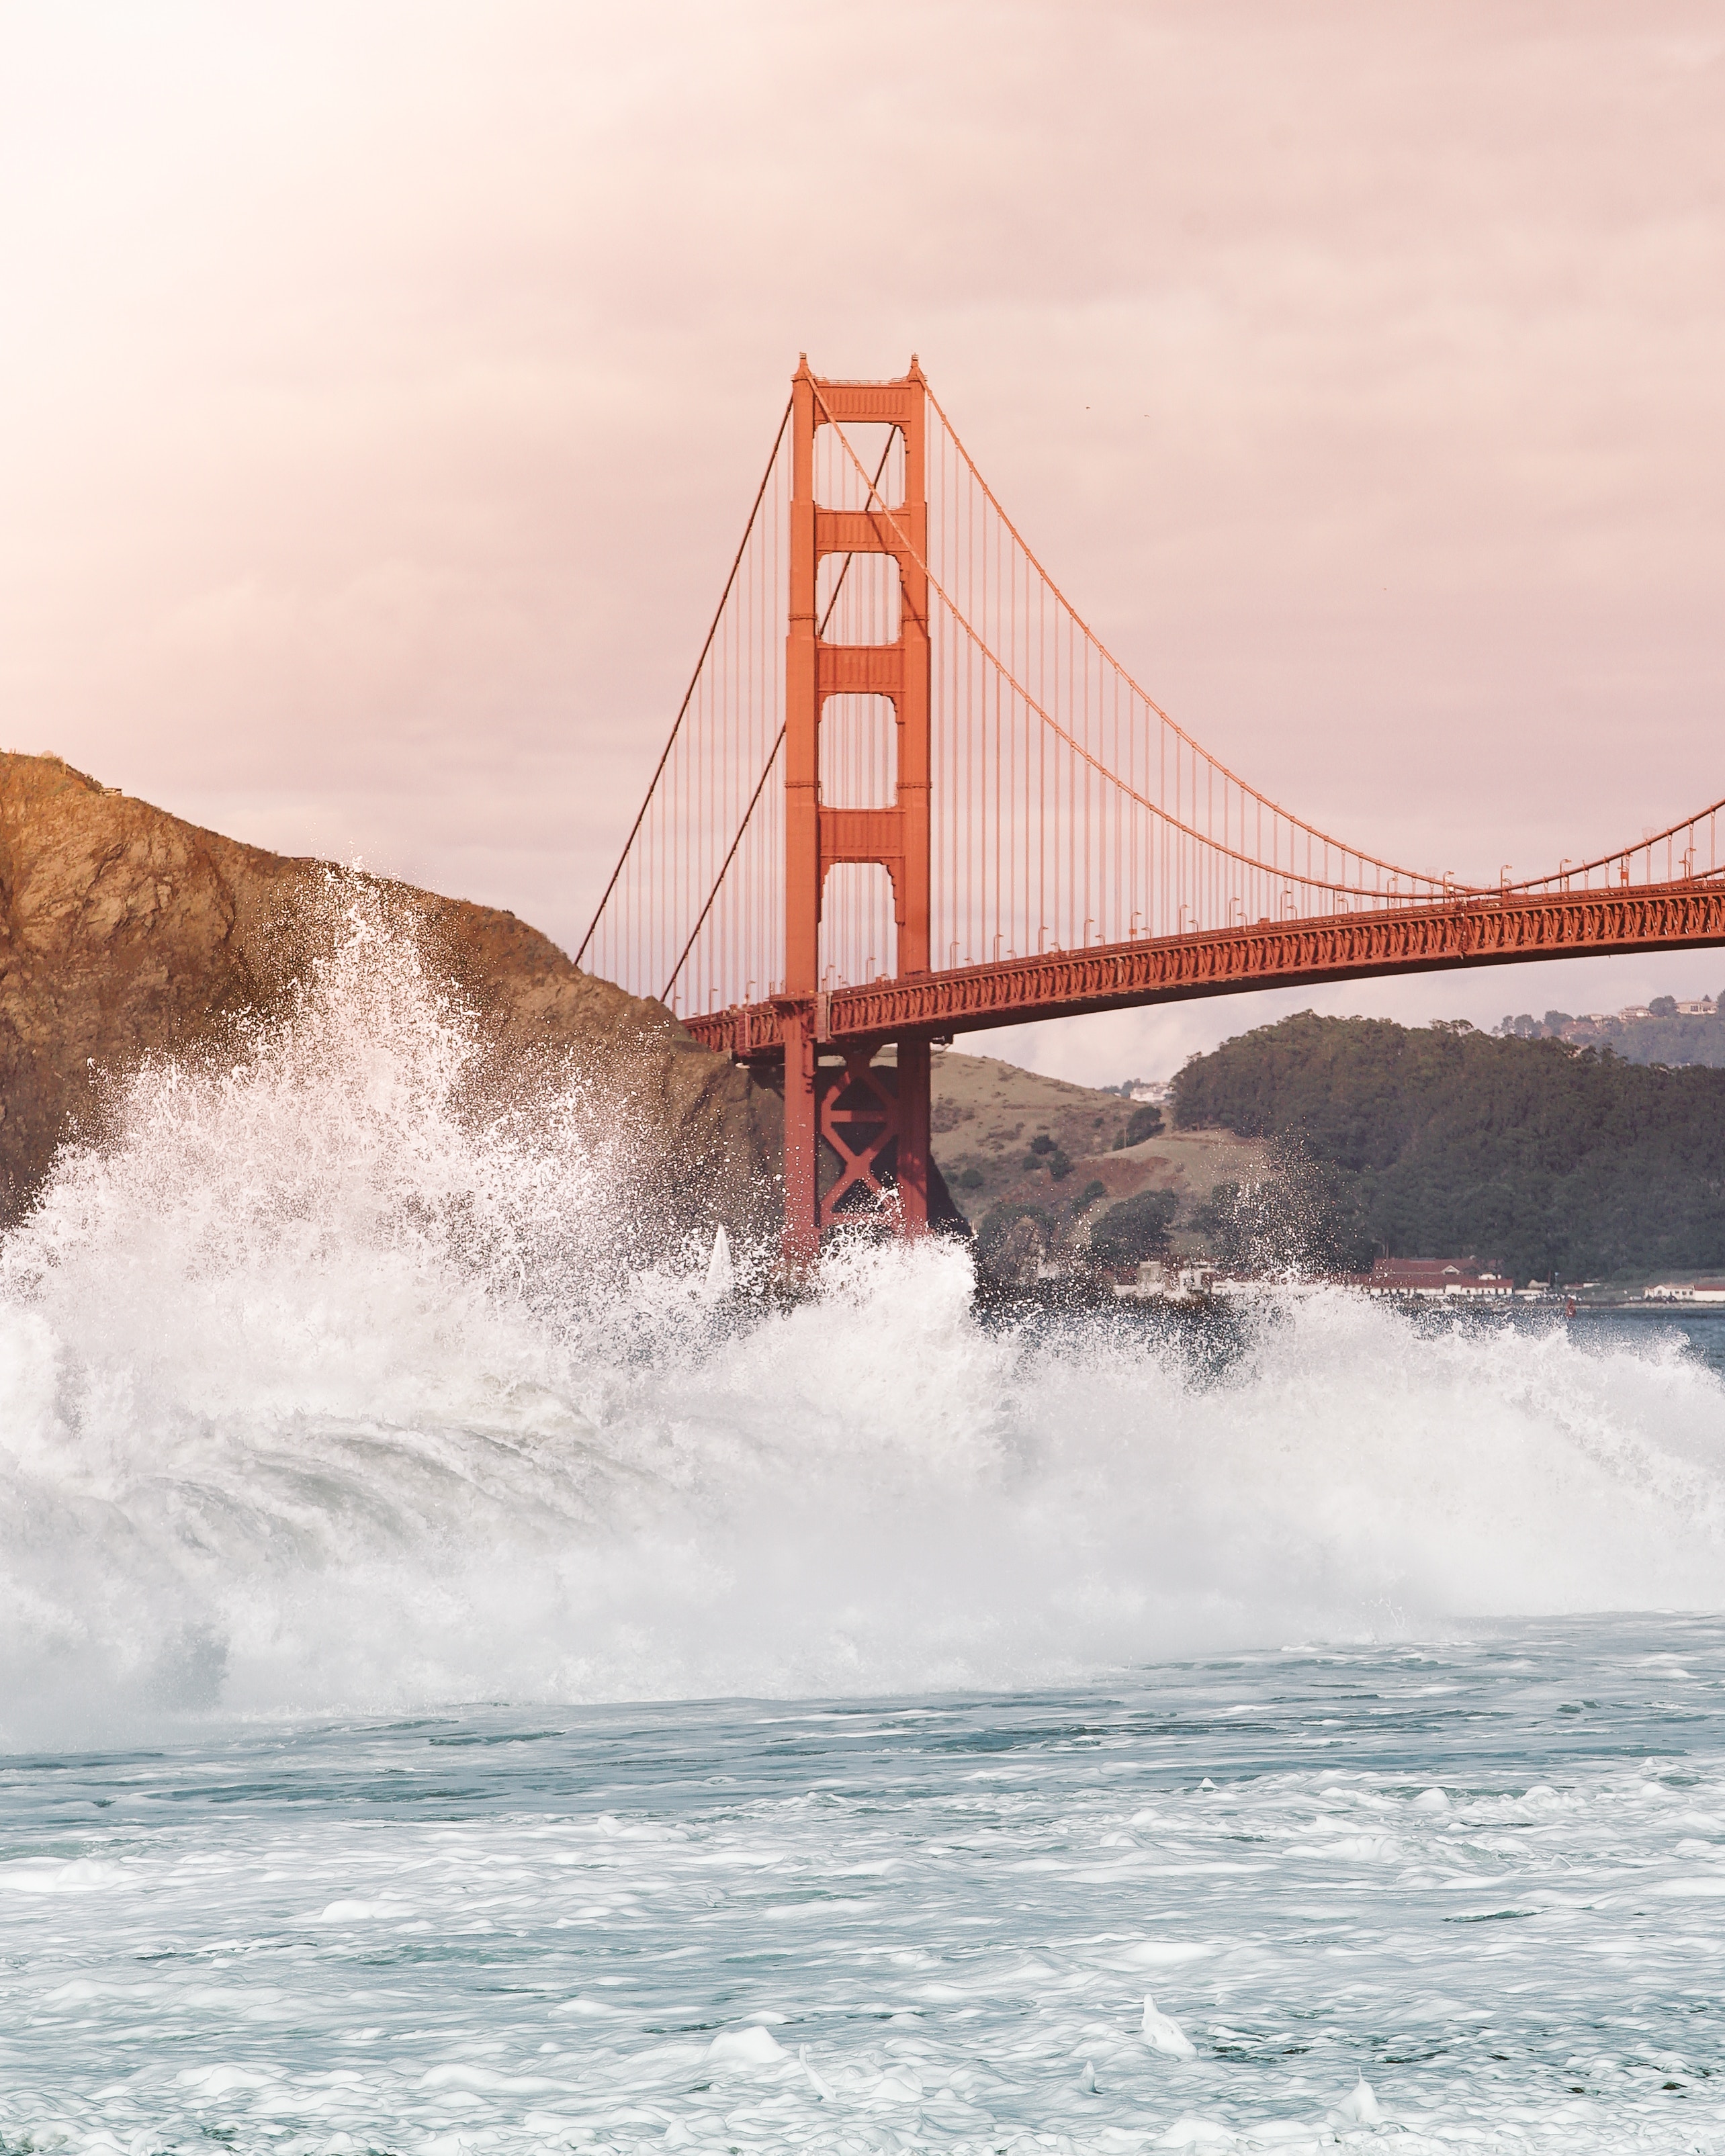 Crashing waves by a red bridge in San Francisco